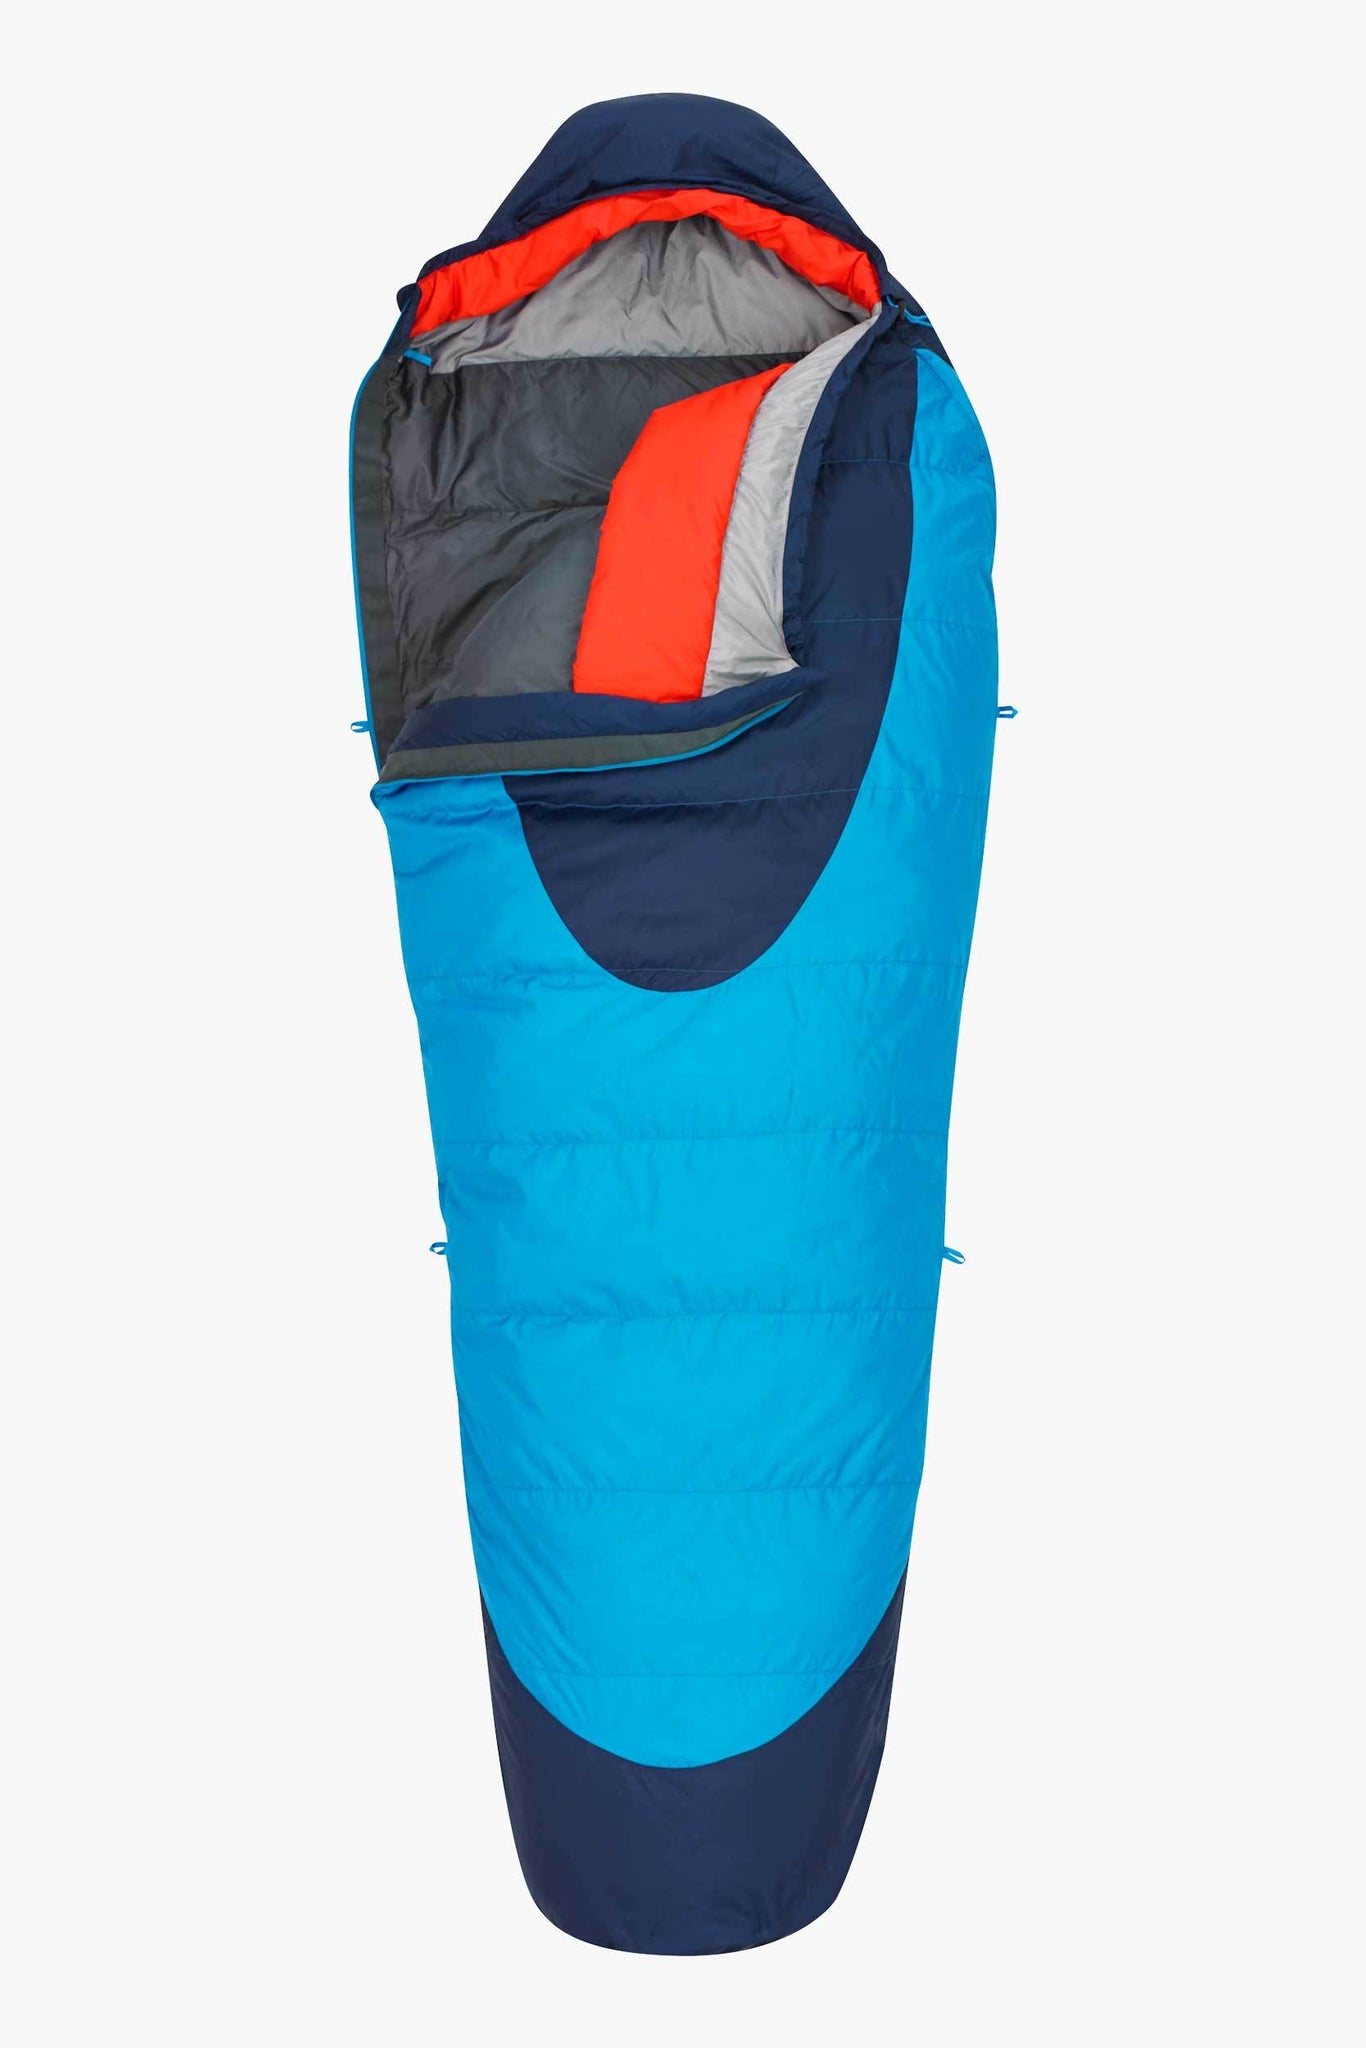 Kelty Cosmic 600 Fill Sleeping Bag